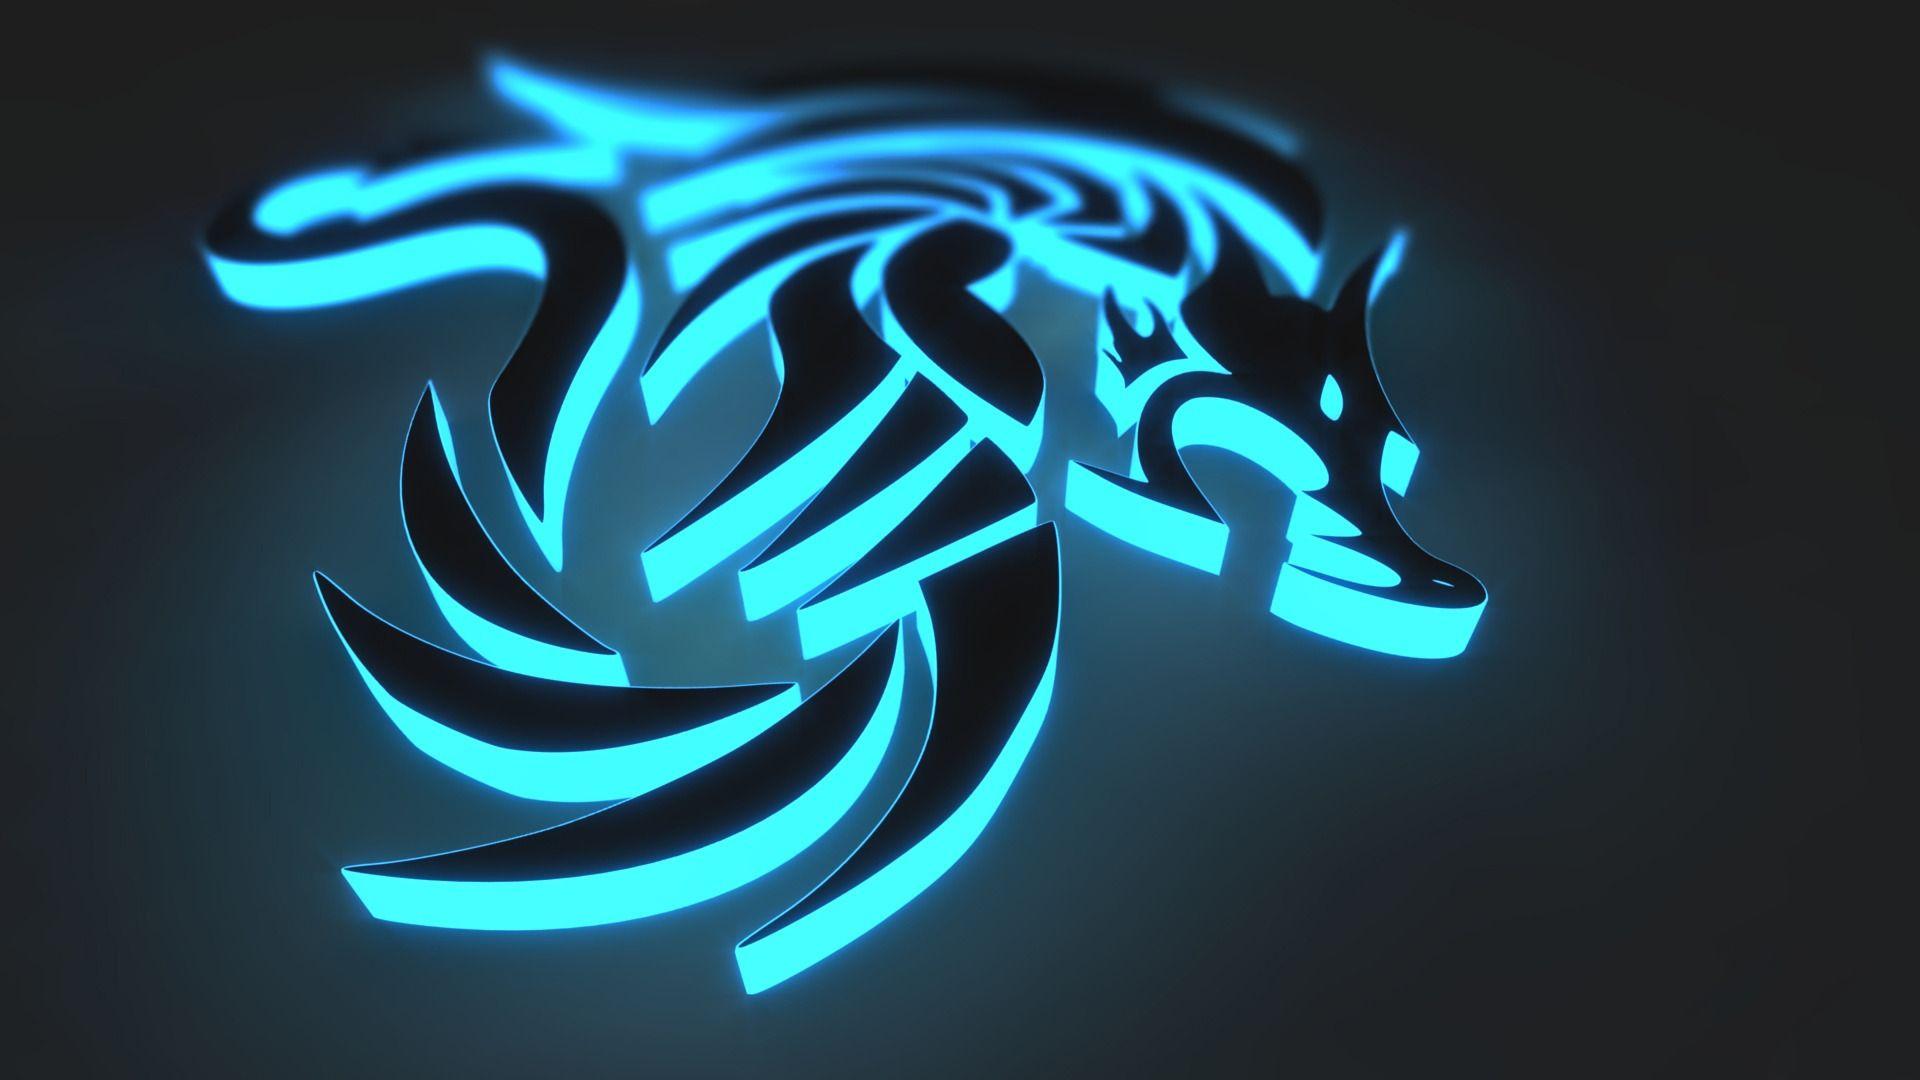 Cool Dragon Logo - Cool 3D Dragon Wallpaper. Ideas for the House. Wallpaper, Live